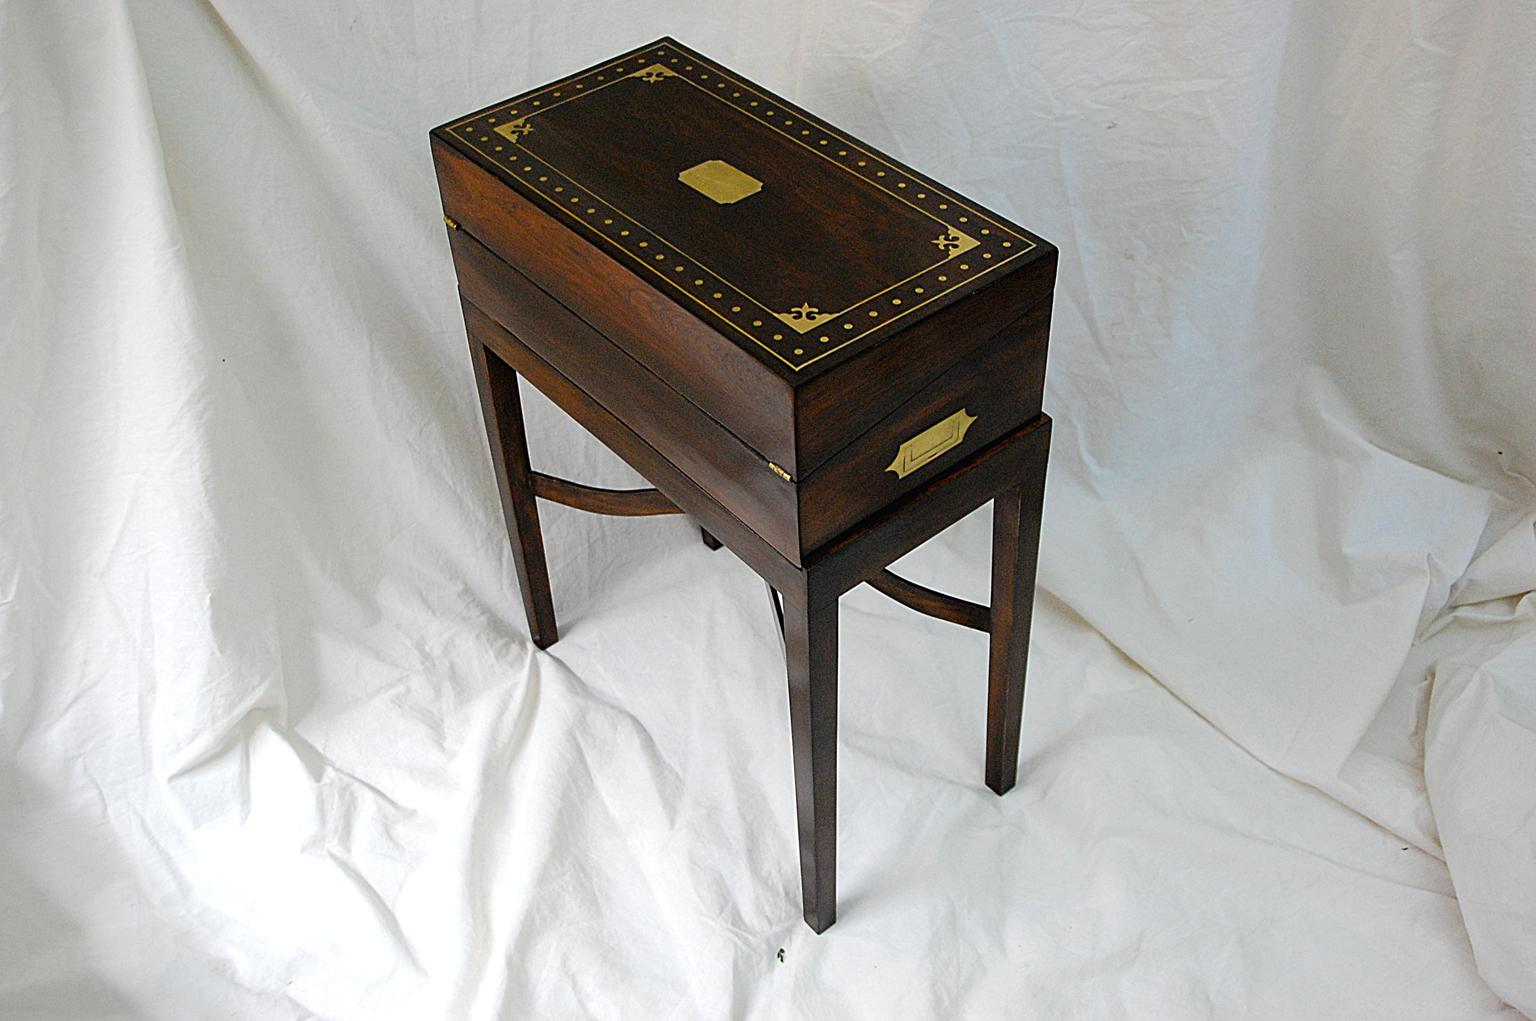 Inlay English Regency Period Brass Inlaid Rosewood Writing Box on Bespoke Stand